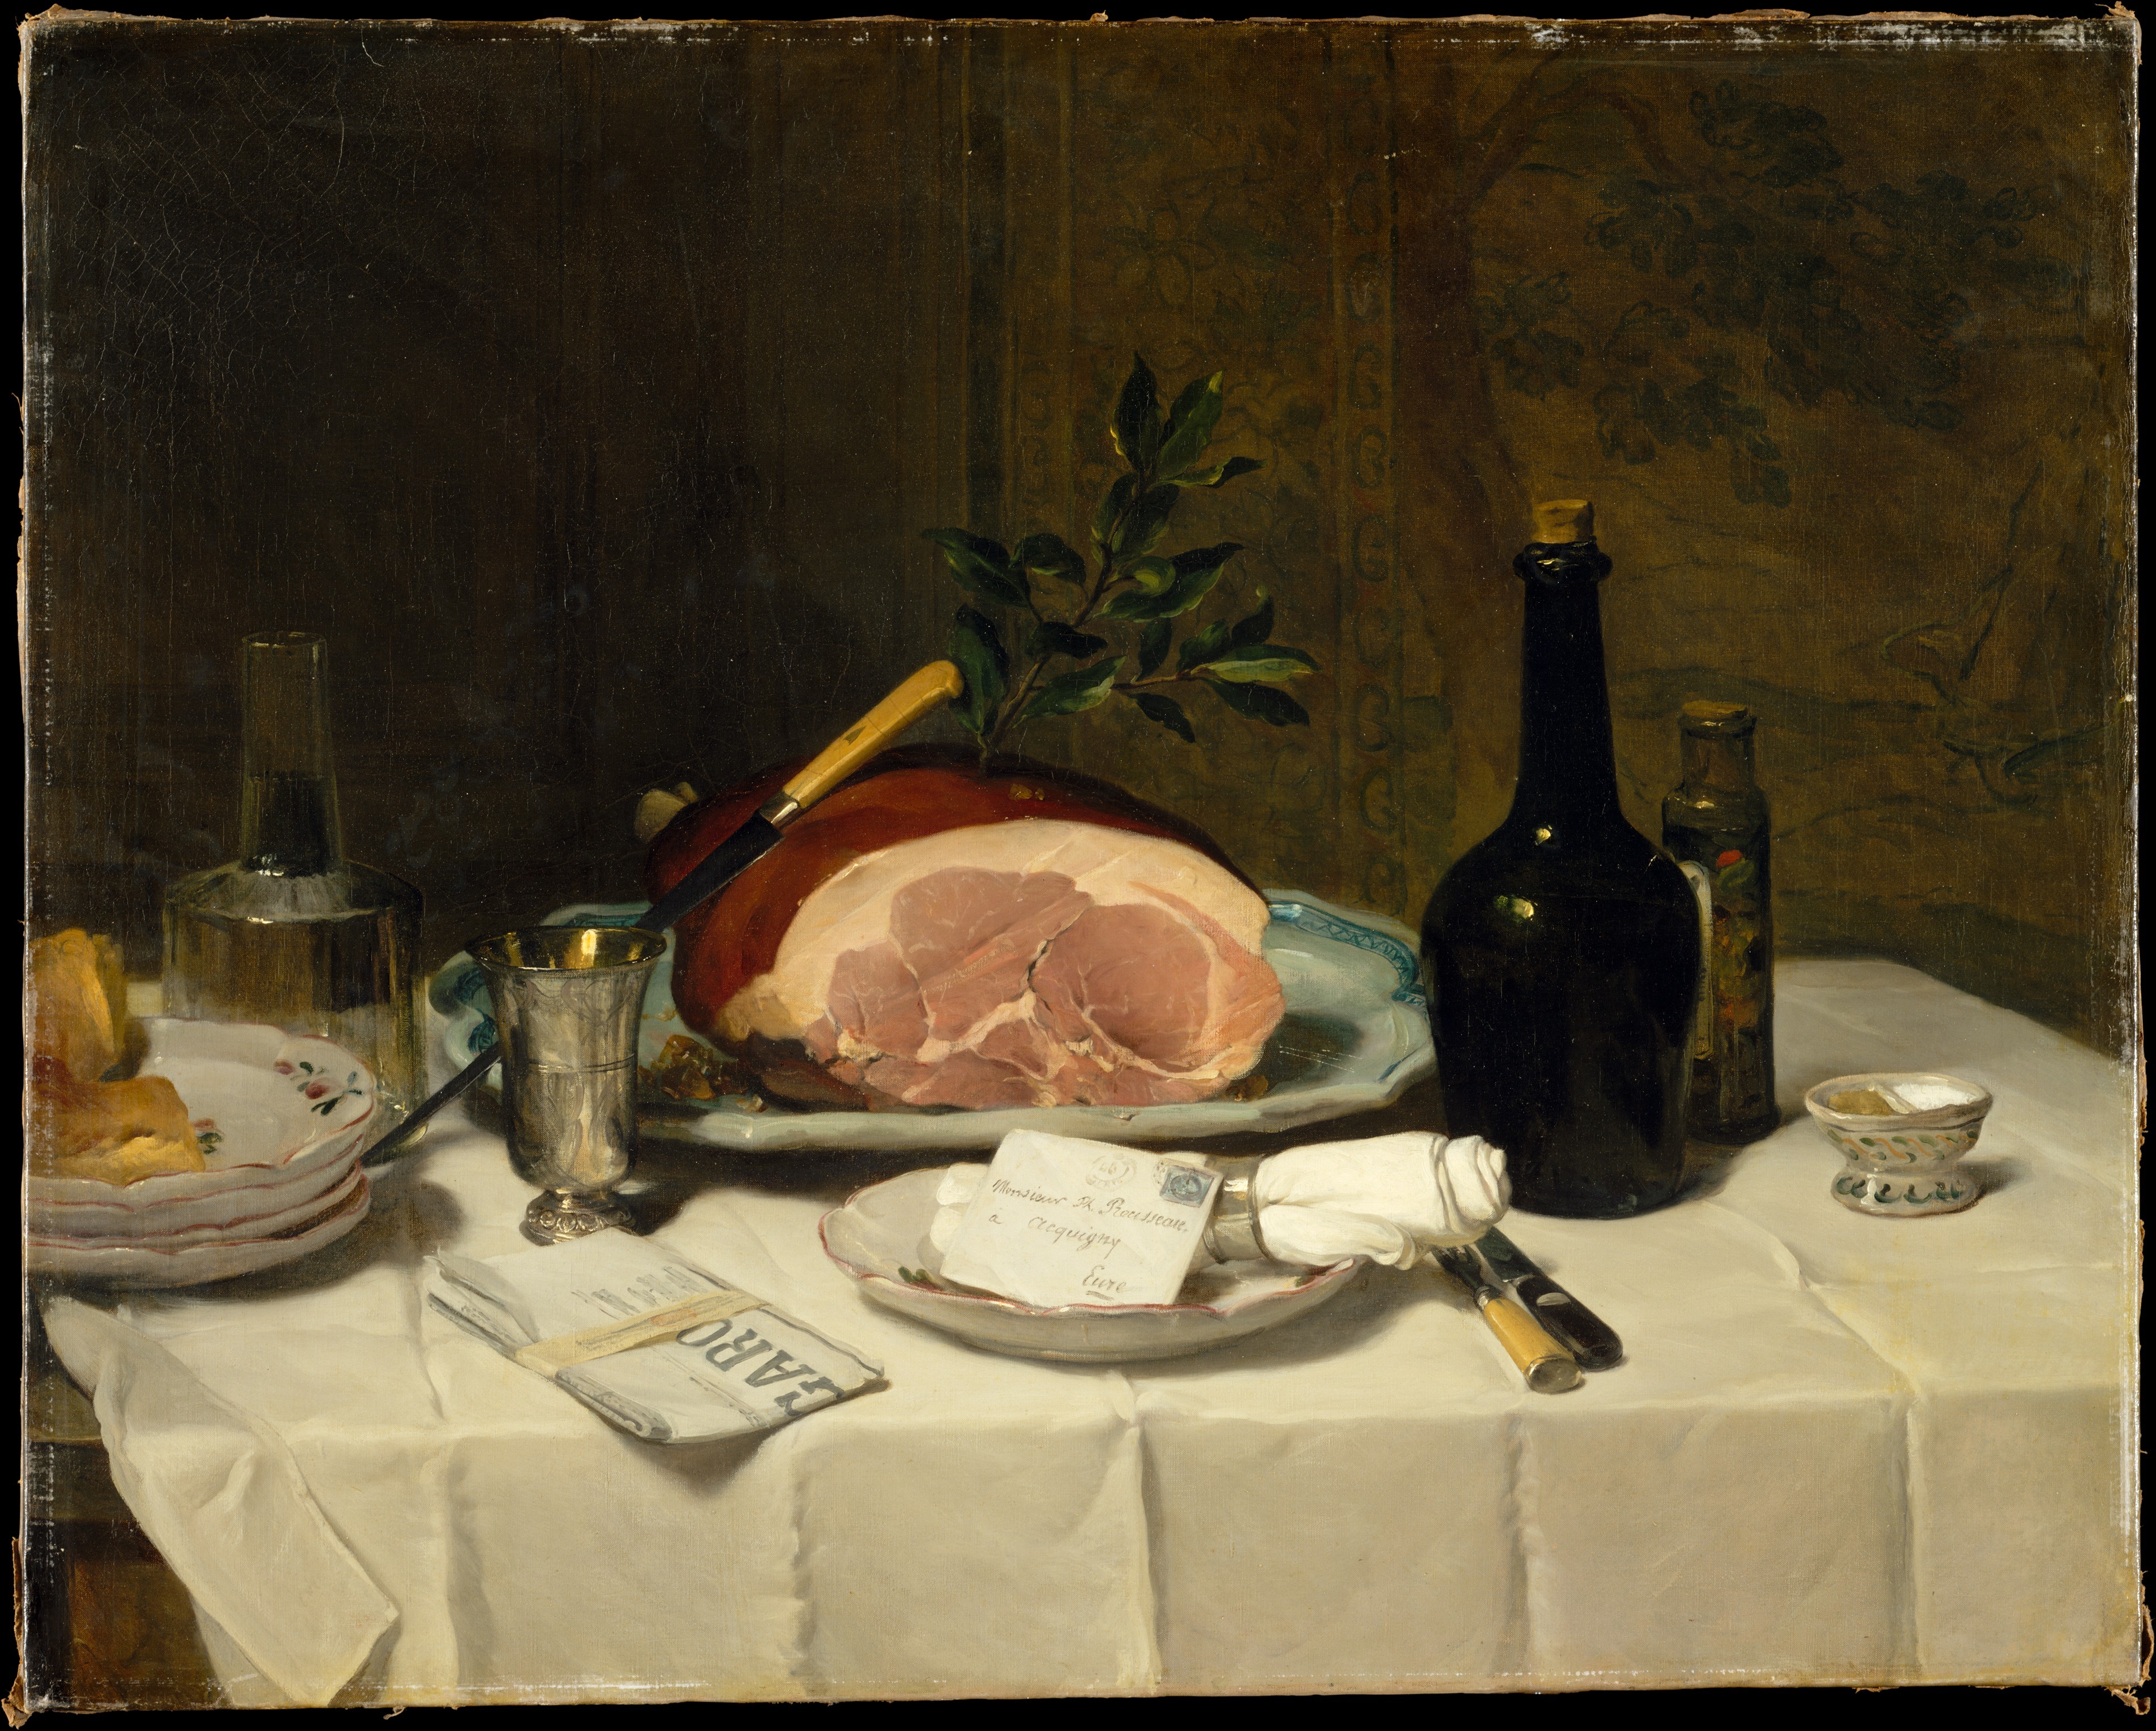 Stilleven met een ham by Philippe Rousseau - 1870 - 73 x 92.1 cm 